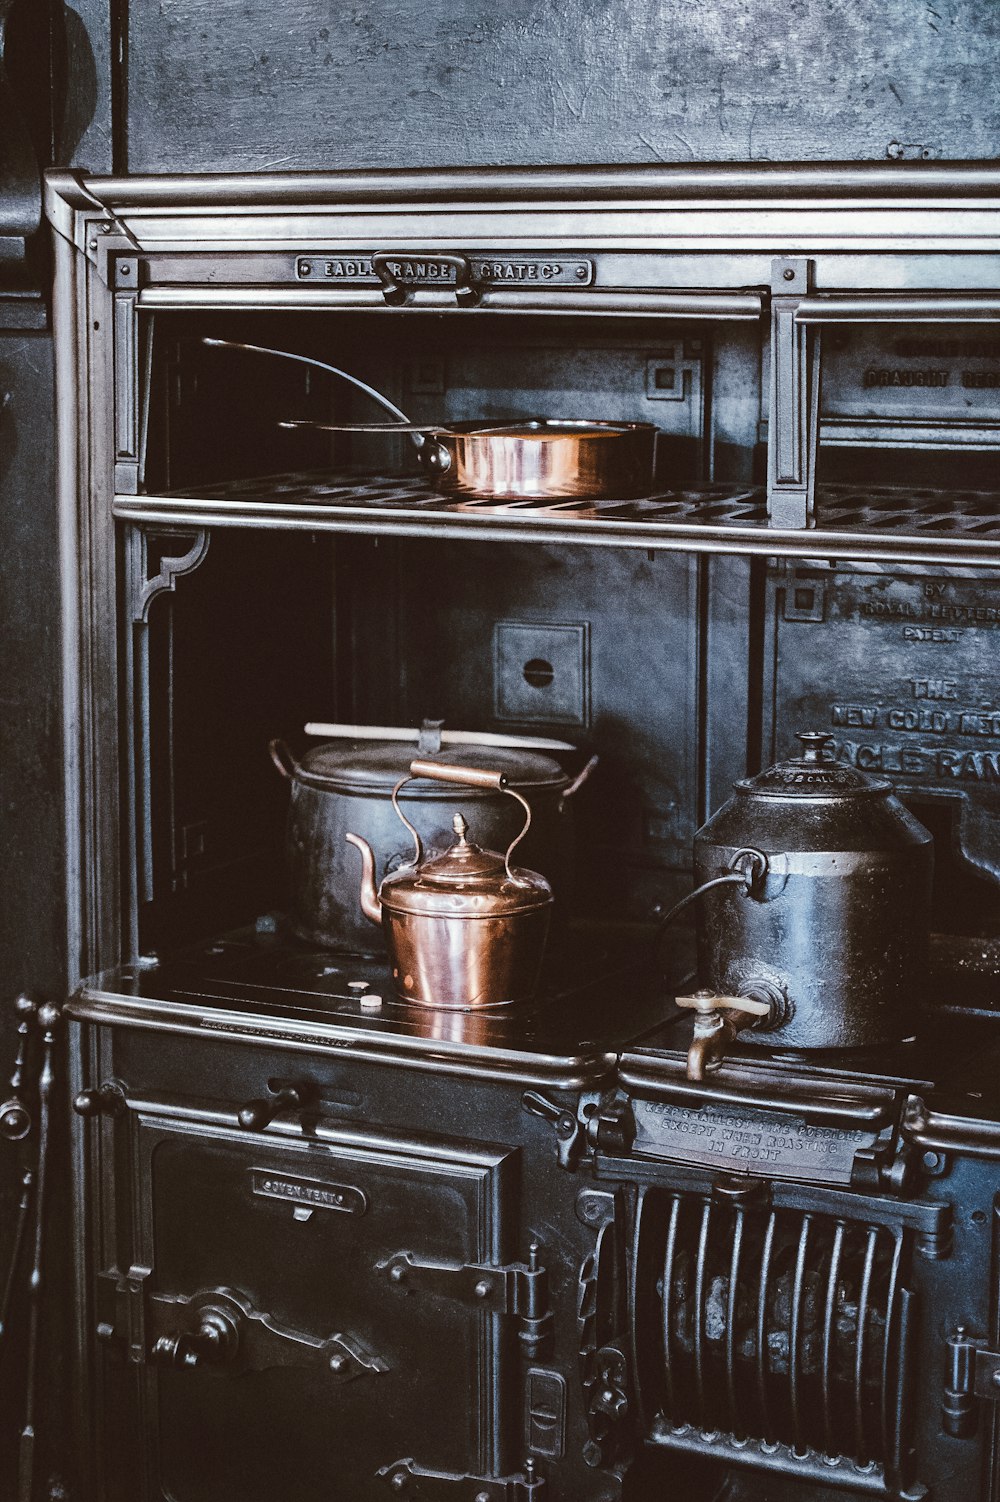 gray stainless steel teapot on range oven